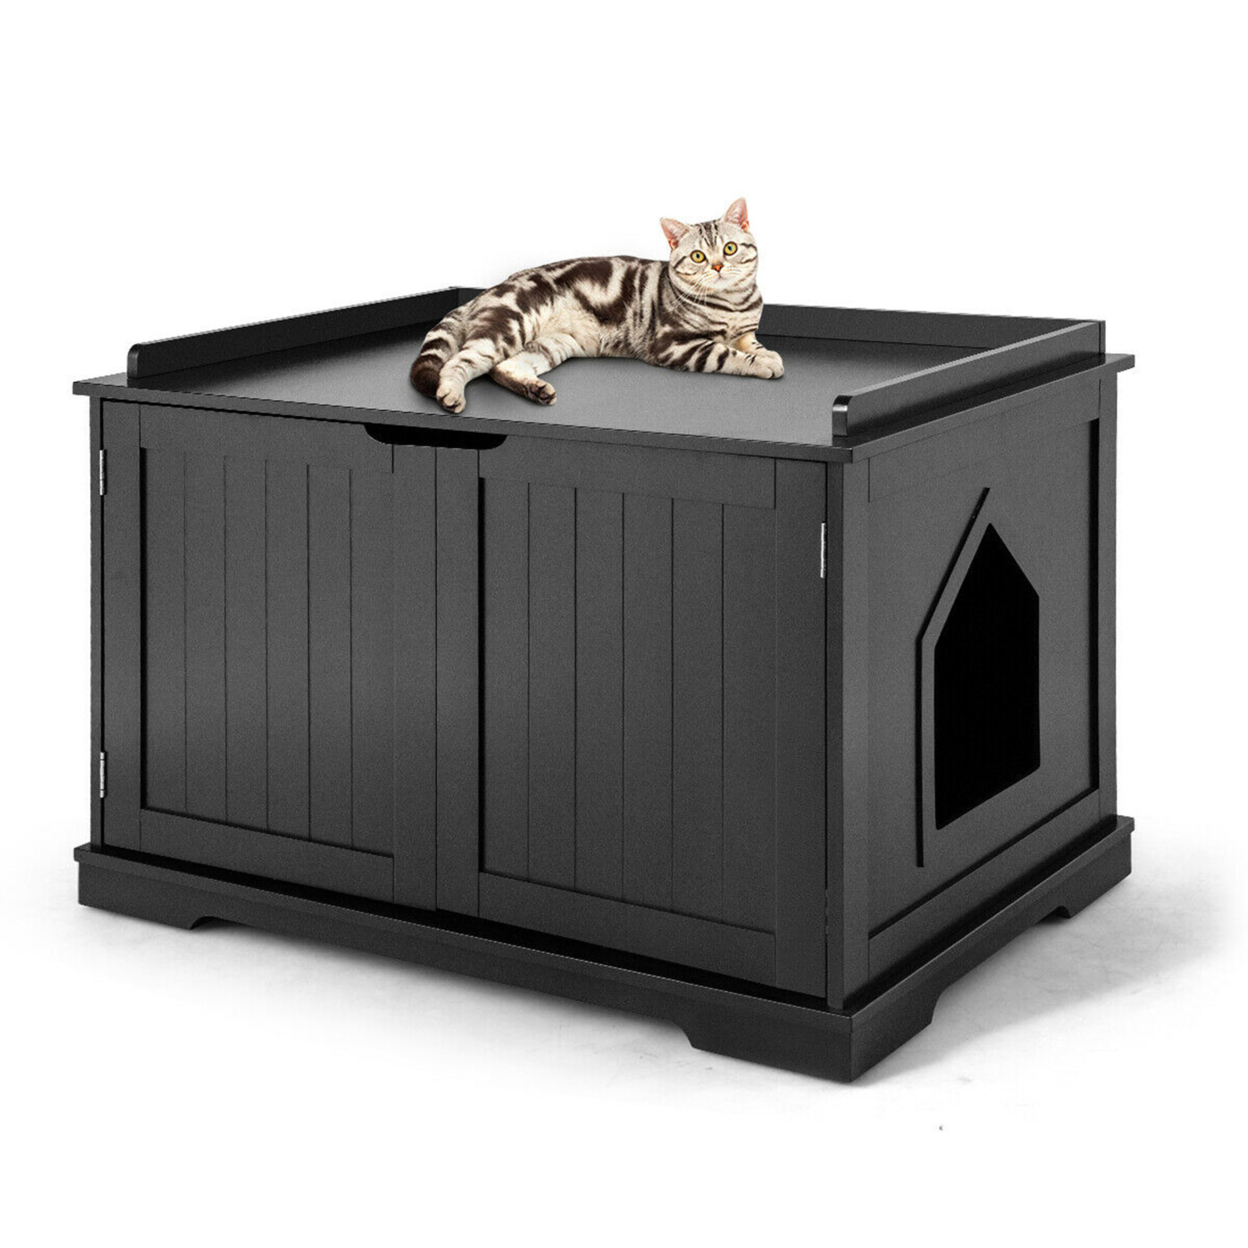 Cat Litter Box Wooden Enclosure Pet House Sidetable Washroom Storage Bench Black